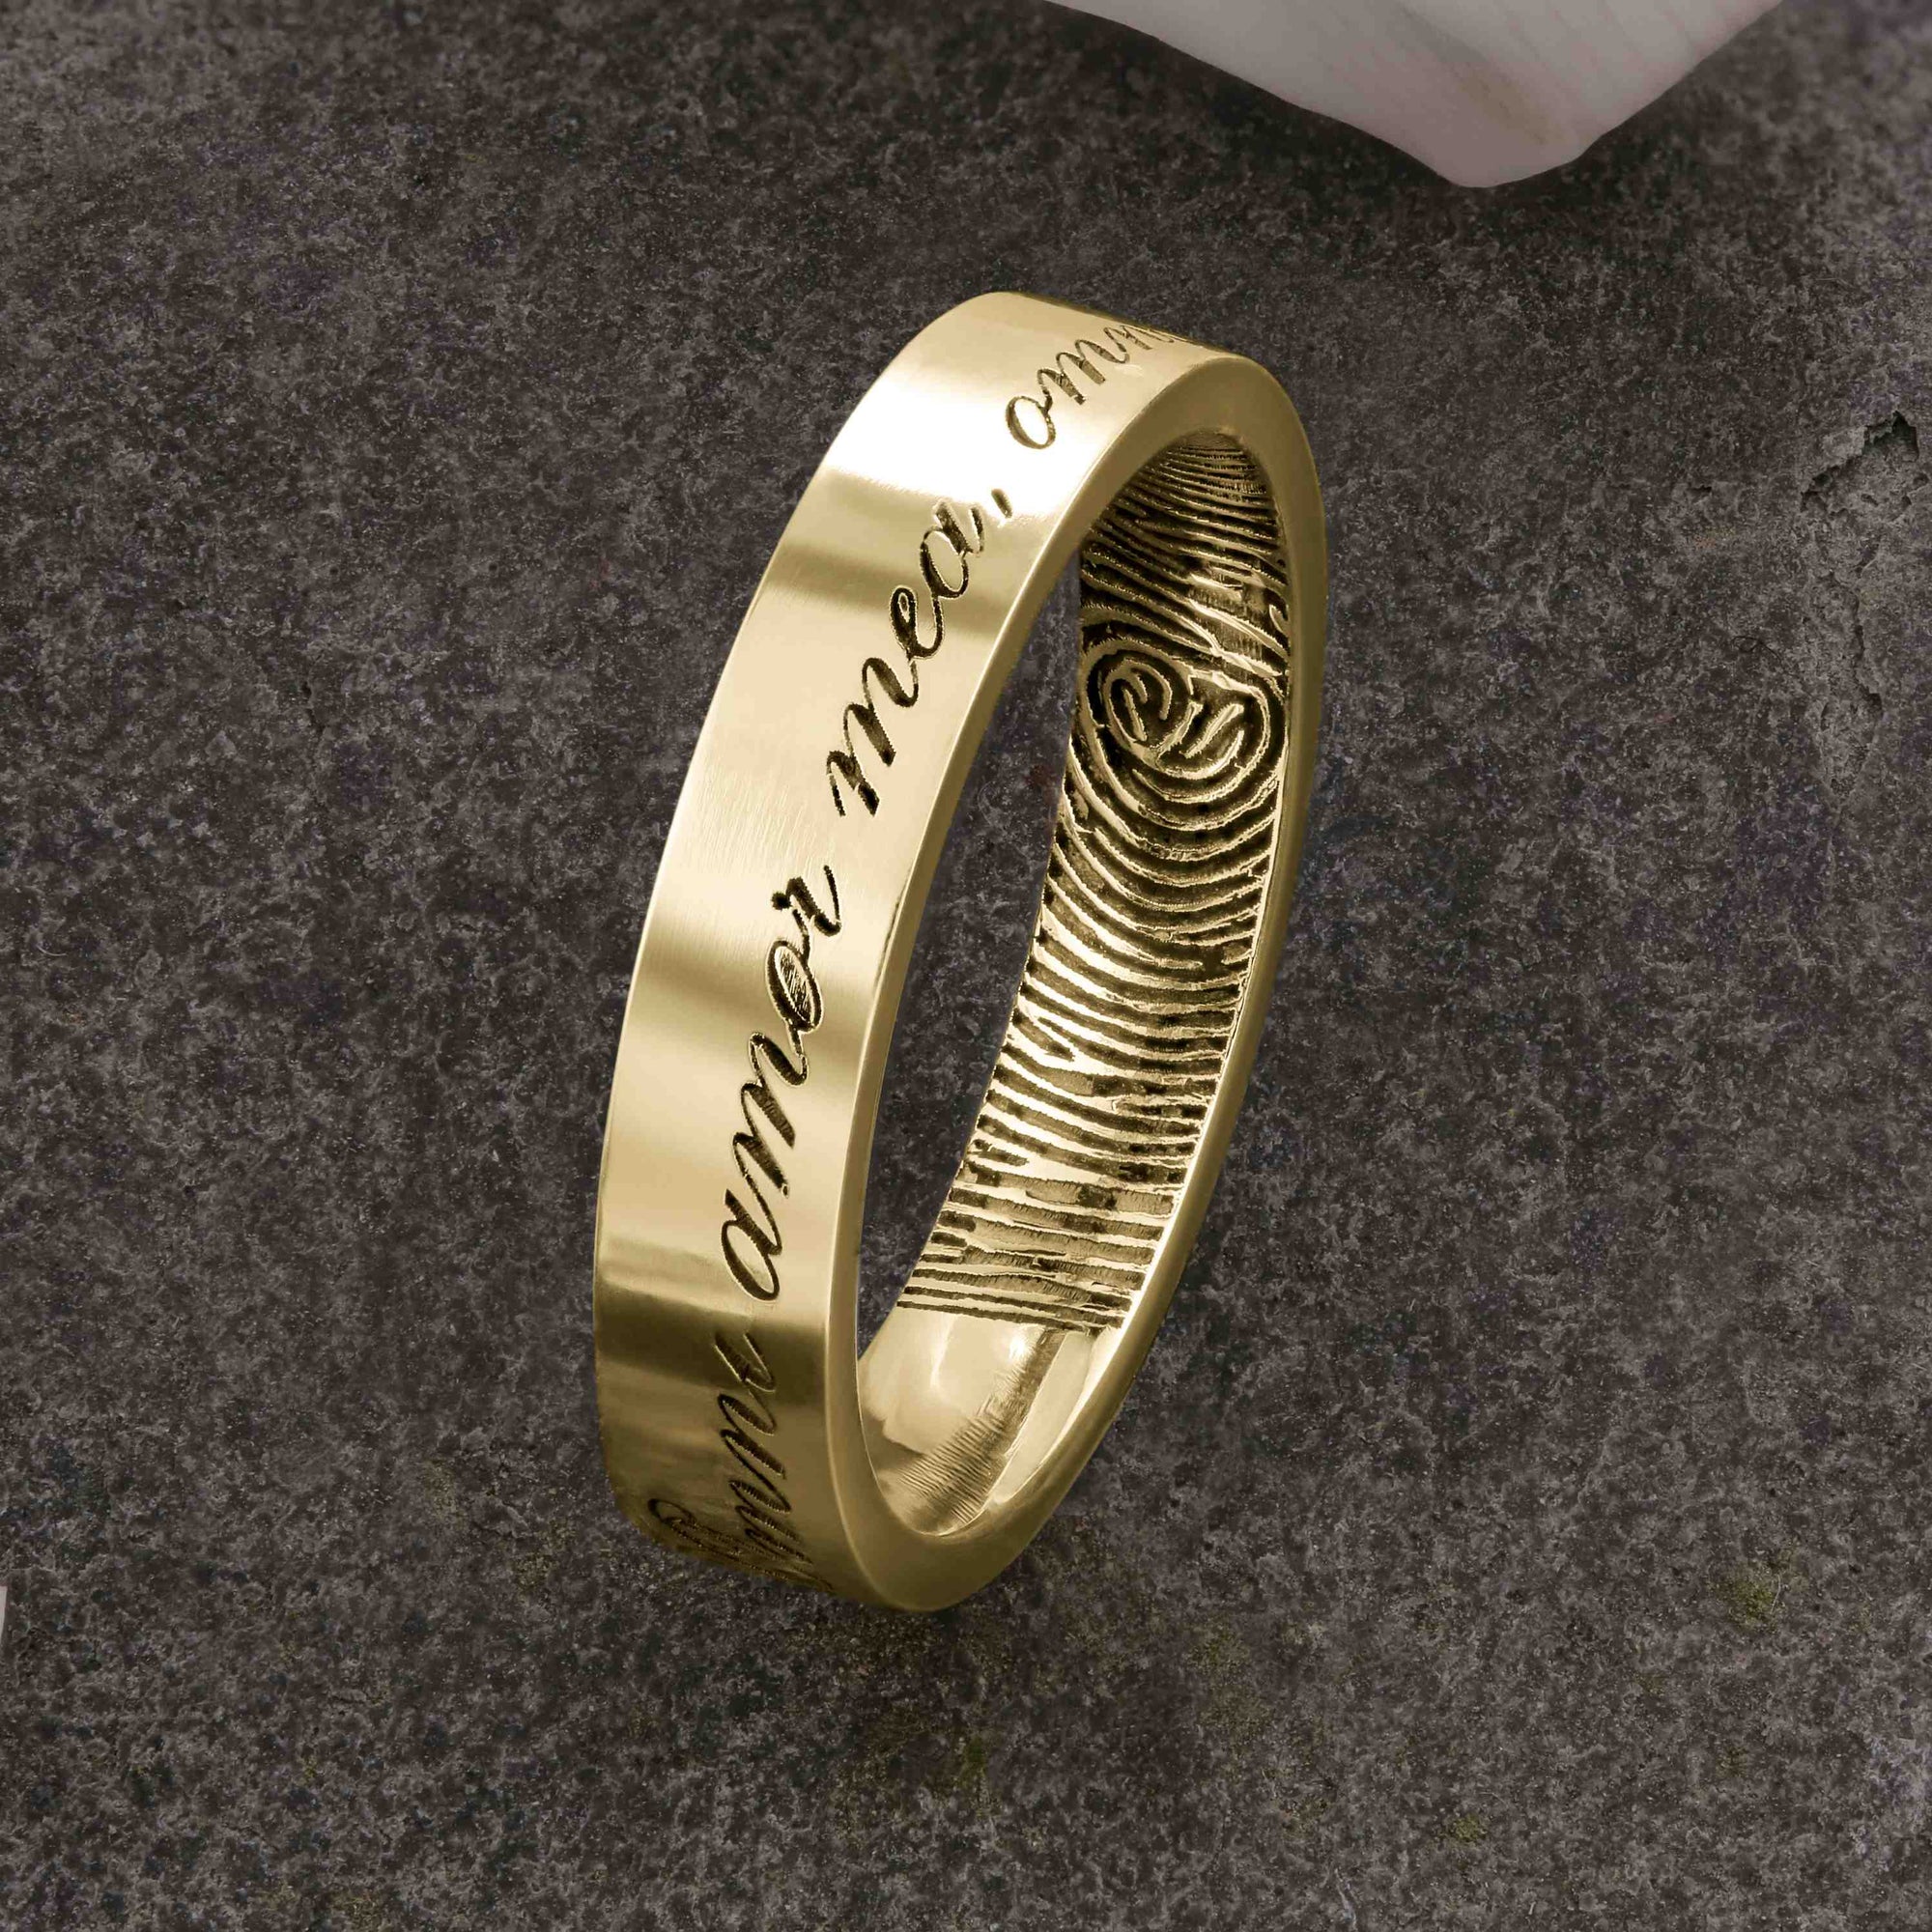 Gold Fingerprint Ring - LASER ENGRAVED GOLD FINGERPRINT RING 4mm FLAT PROFILE. Engraved Latin Inscription.